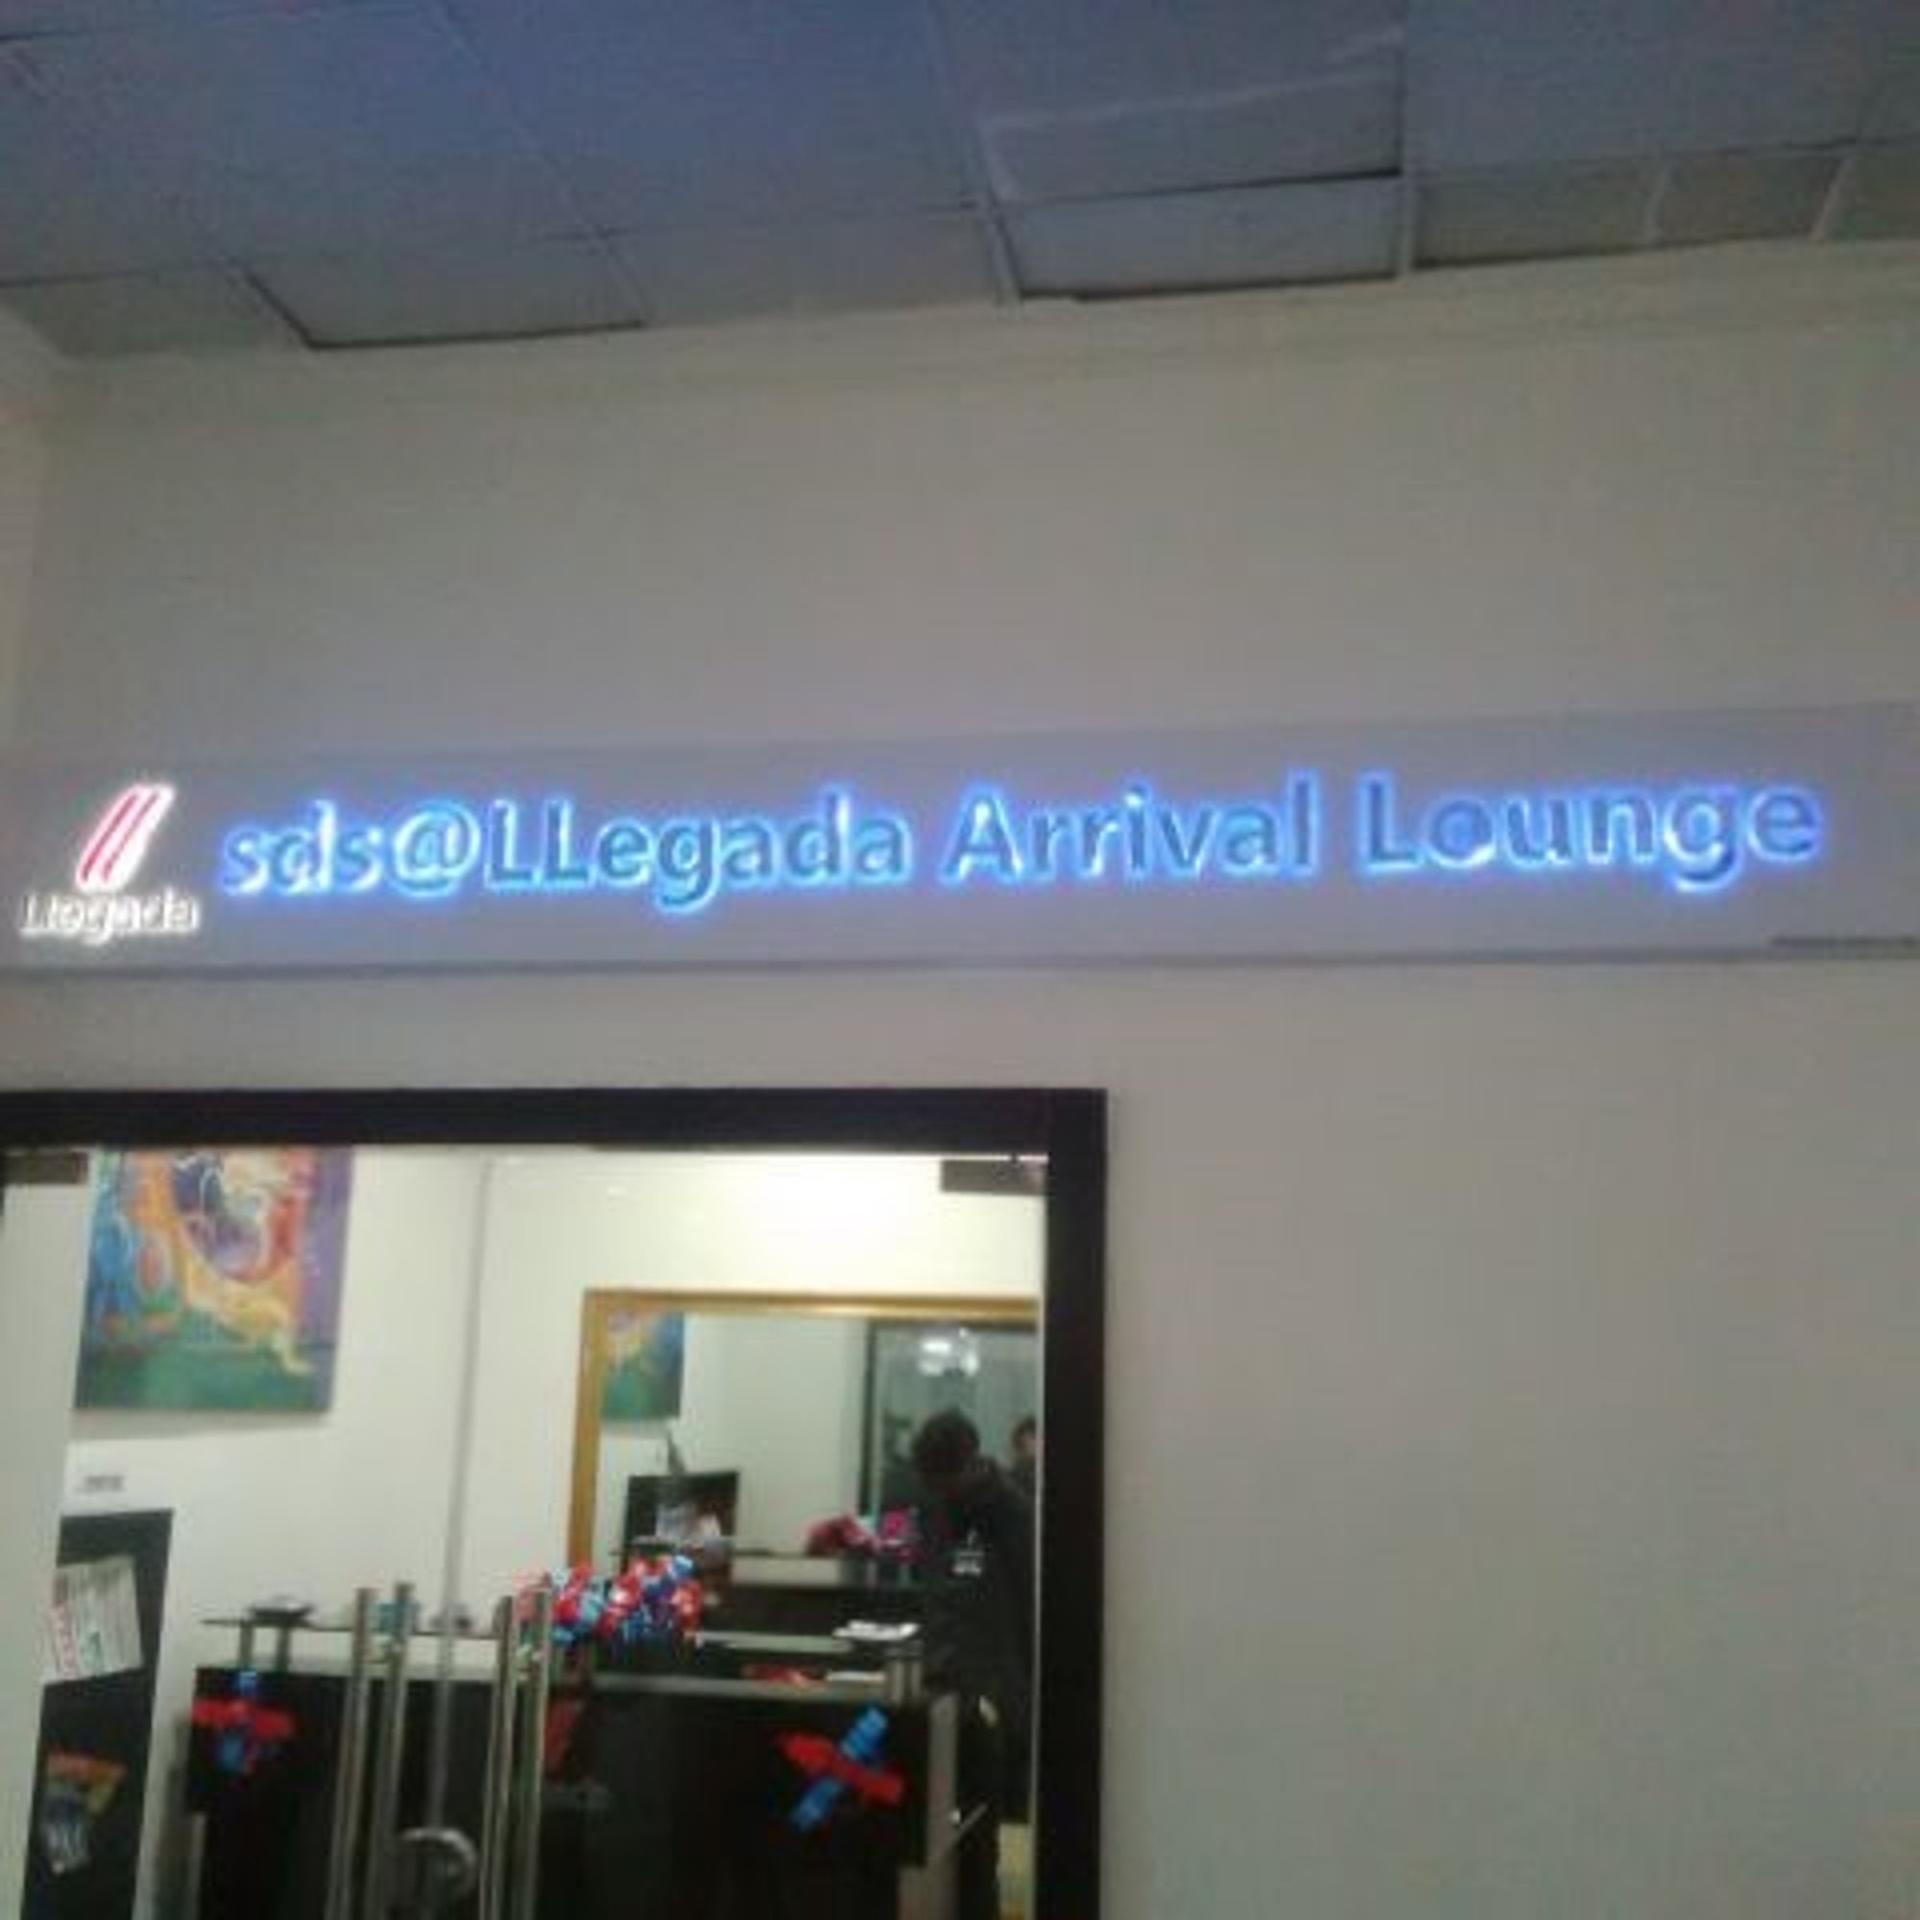 SDS Llegada Arrival Lounge (D-Wing) image 6 of 8